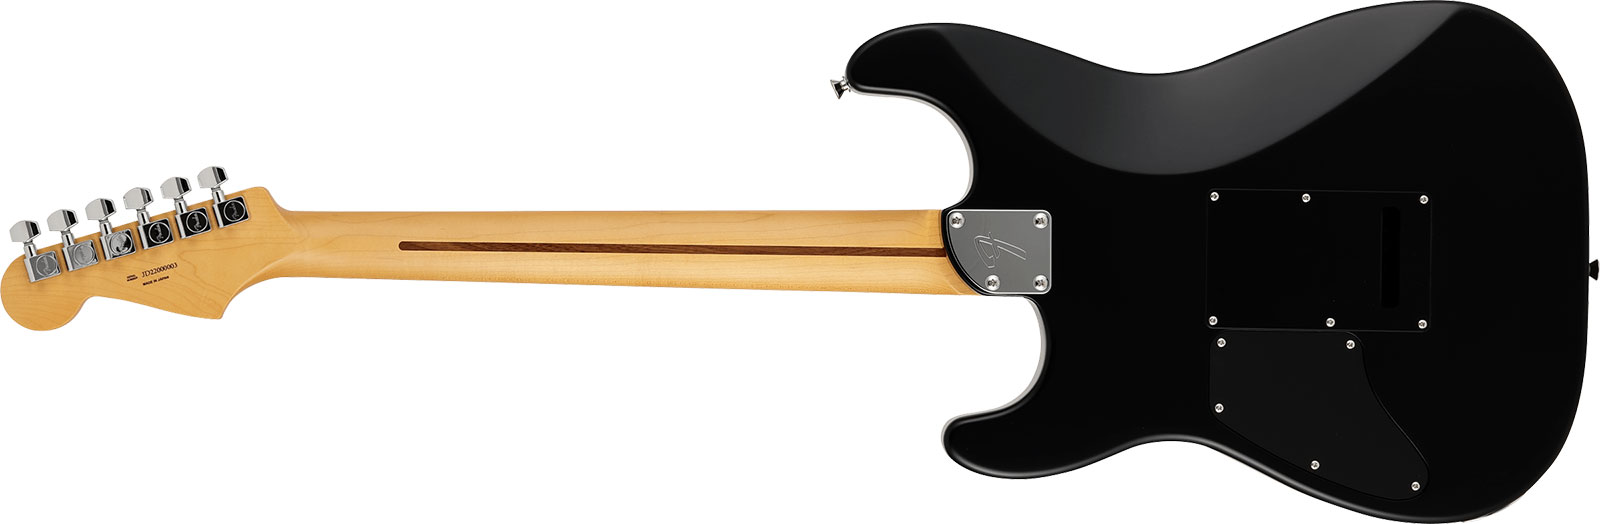 Fender Strat Elemental Mij Jap 2h Trem Rw - Stone Black - Guitarra eléctrica con forma de str. - Variation 1